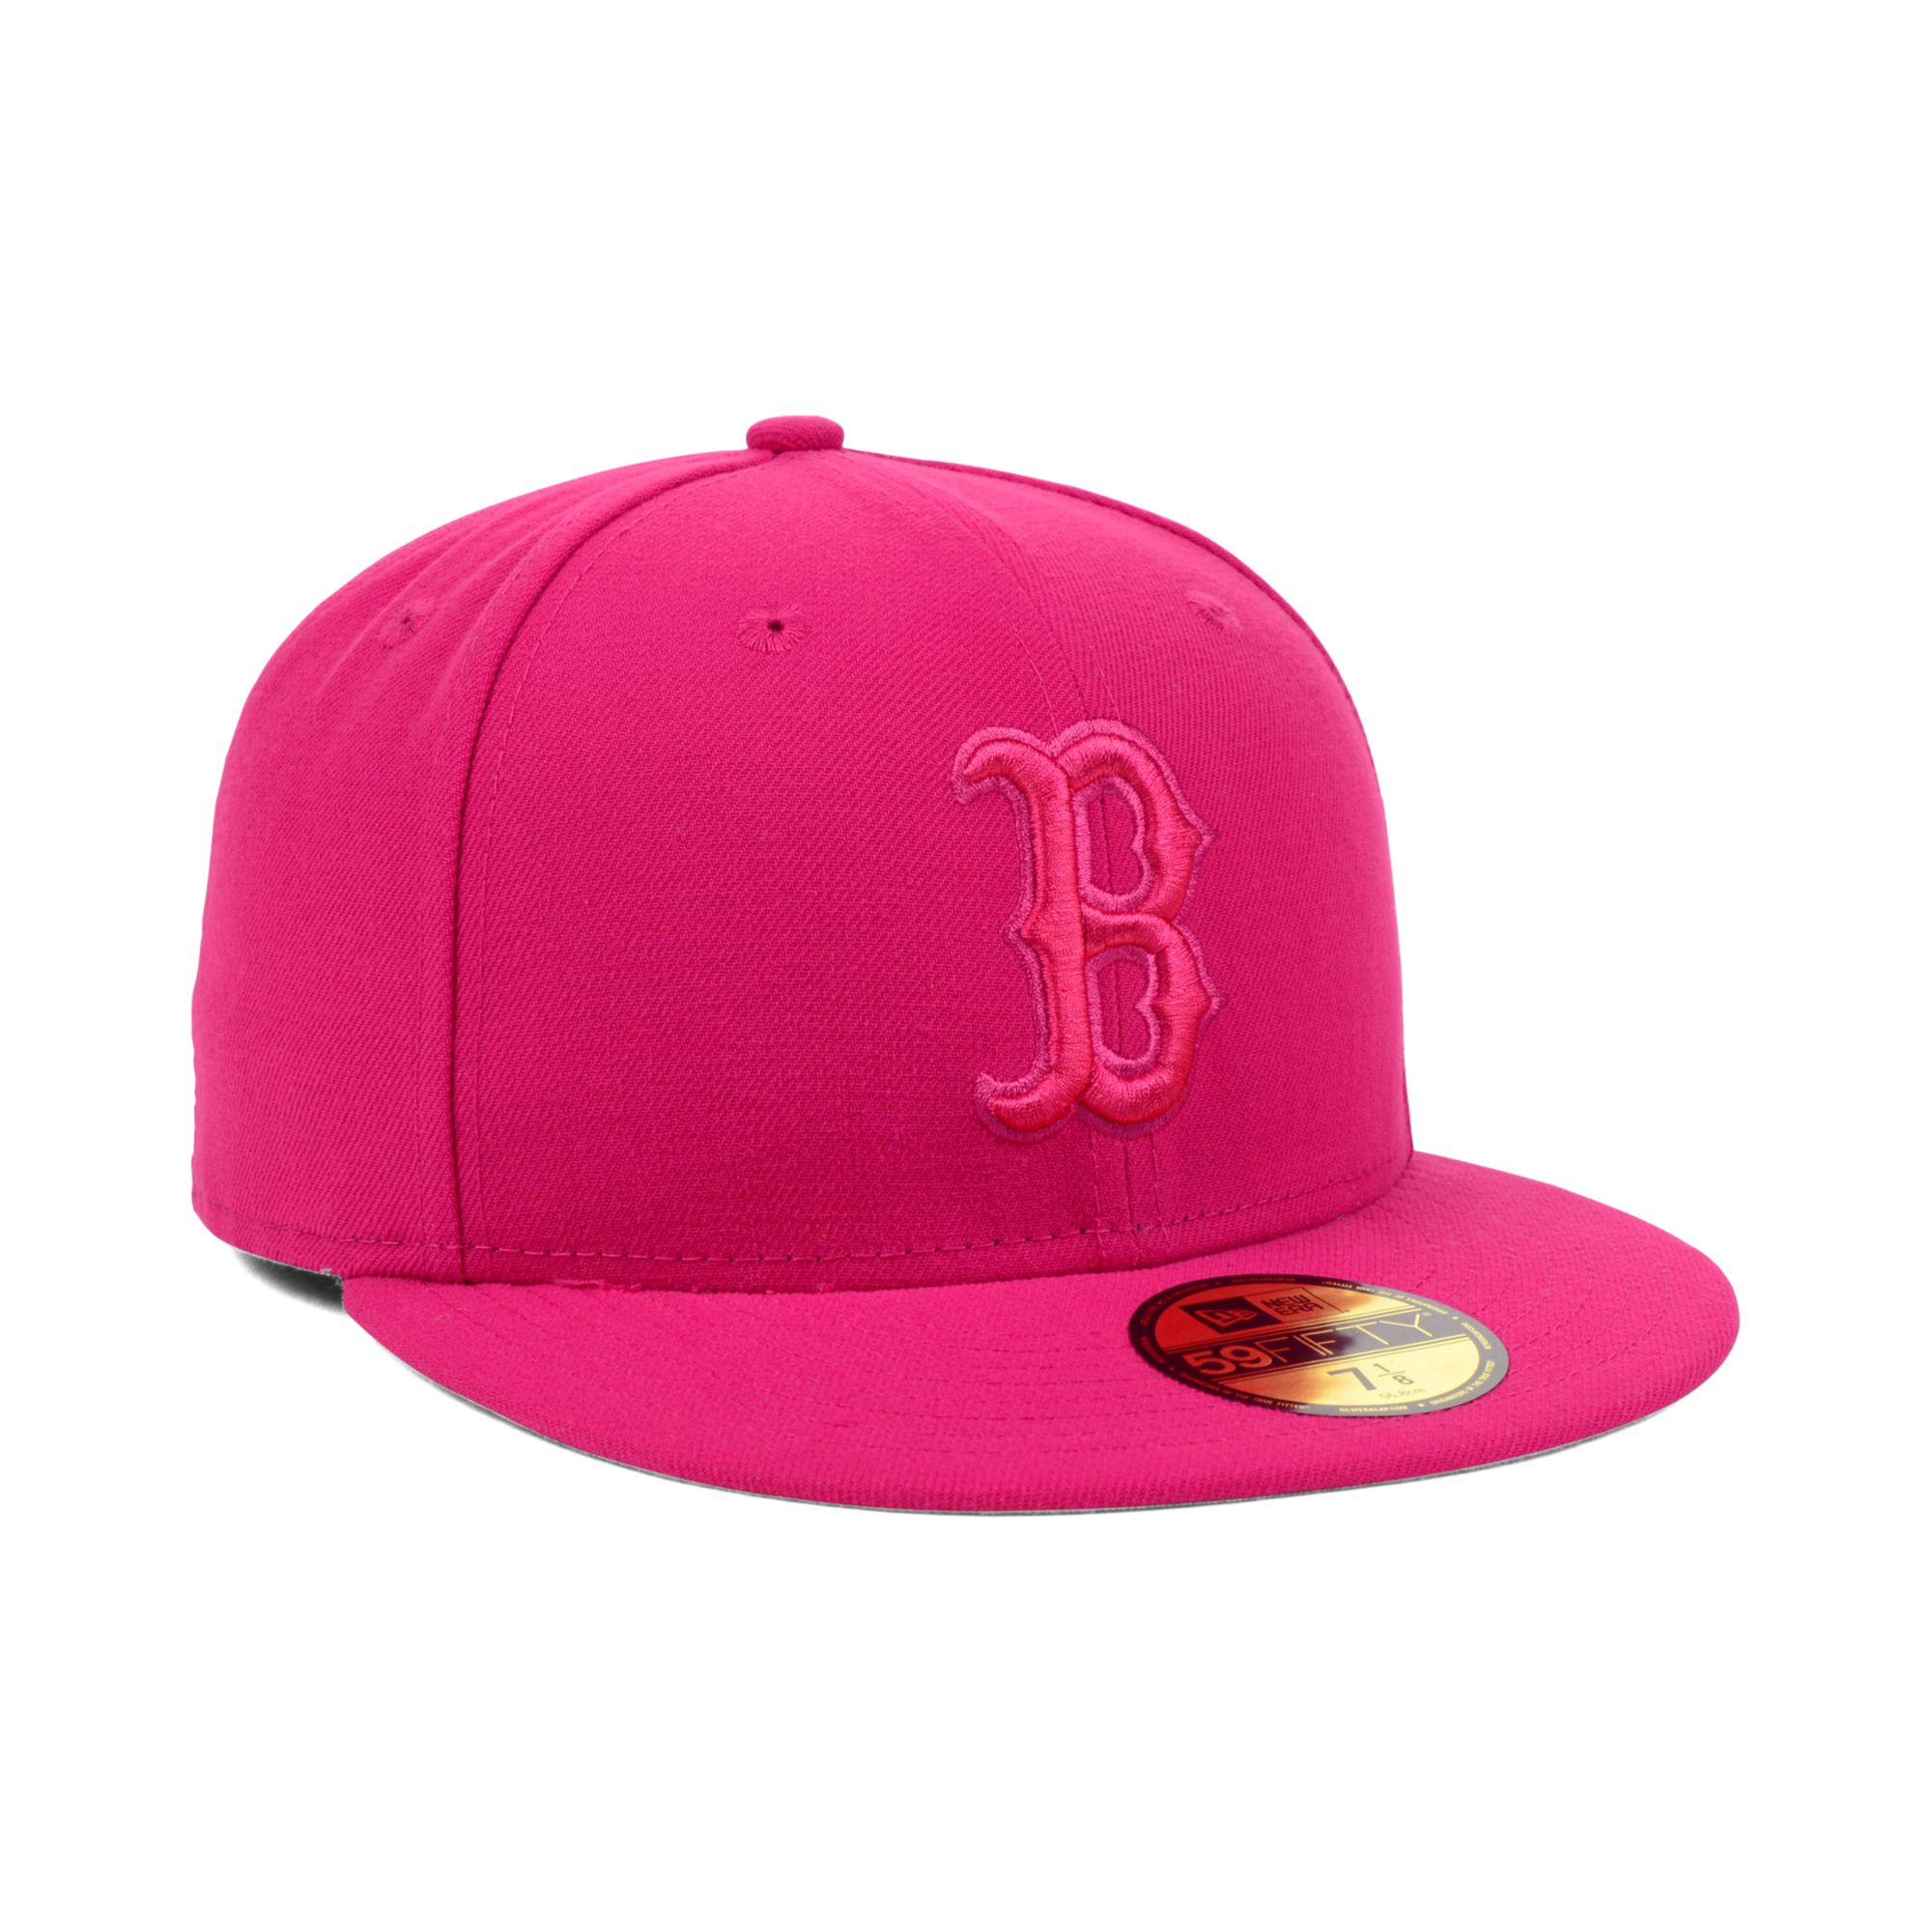 KTZ Boston Red Sox Pop Tonal 59fifty Cap in Rose (Pink) - Lyst